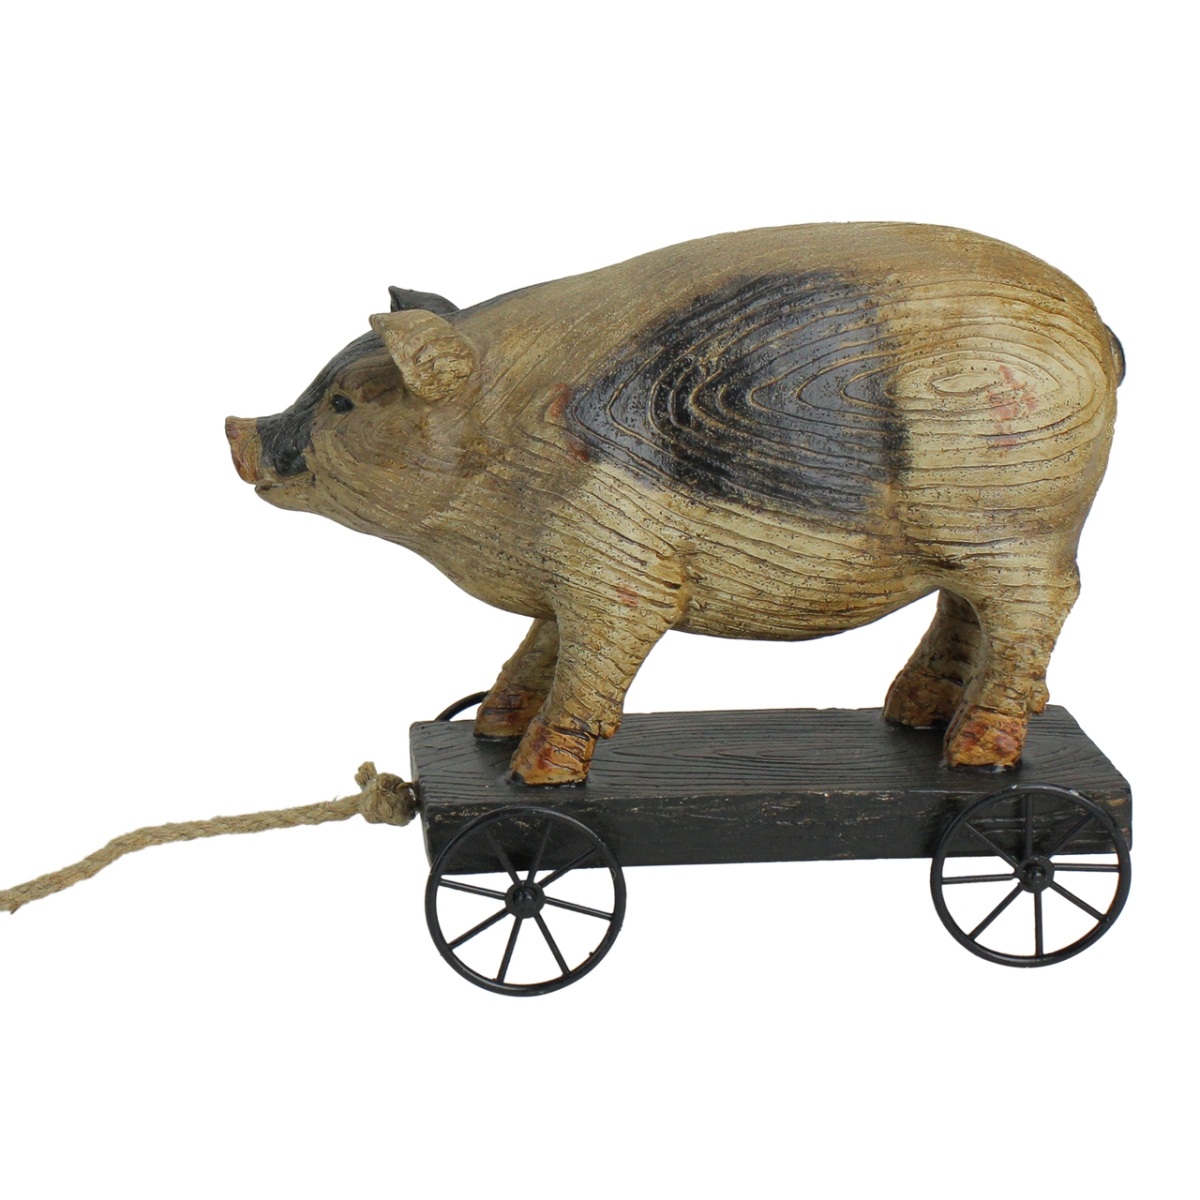 33377633 10 In. Black & White Wood Textured Pig On Cart Outdoor Garden Statue